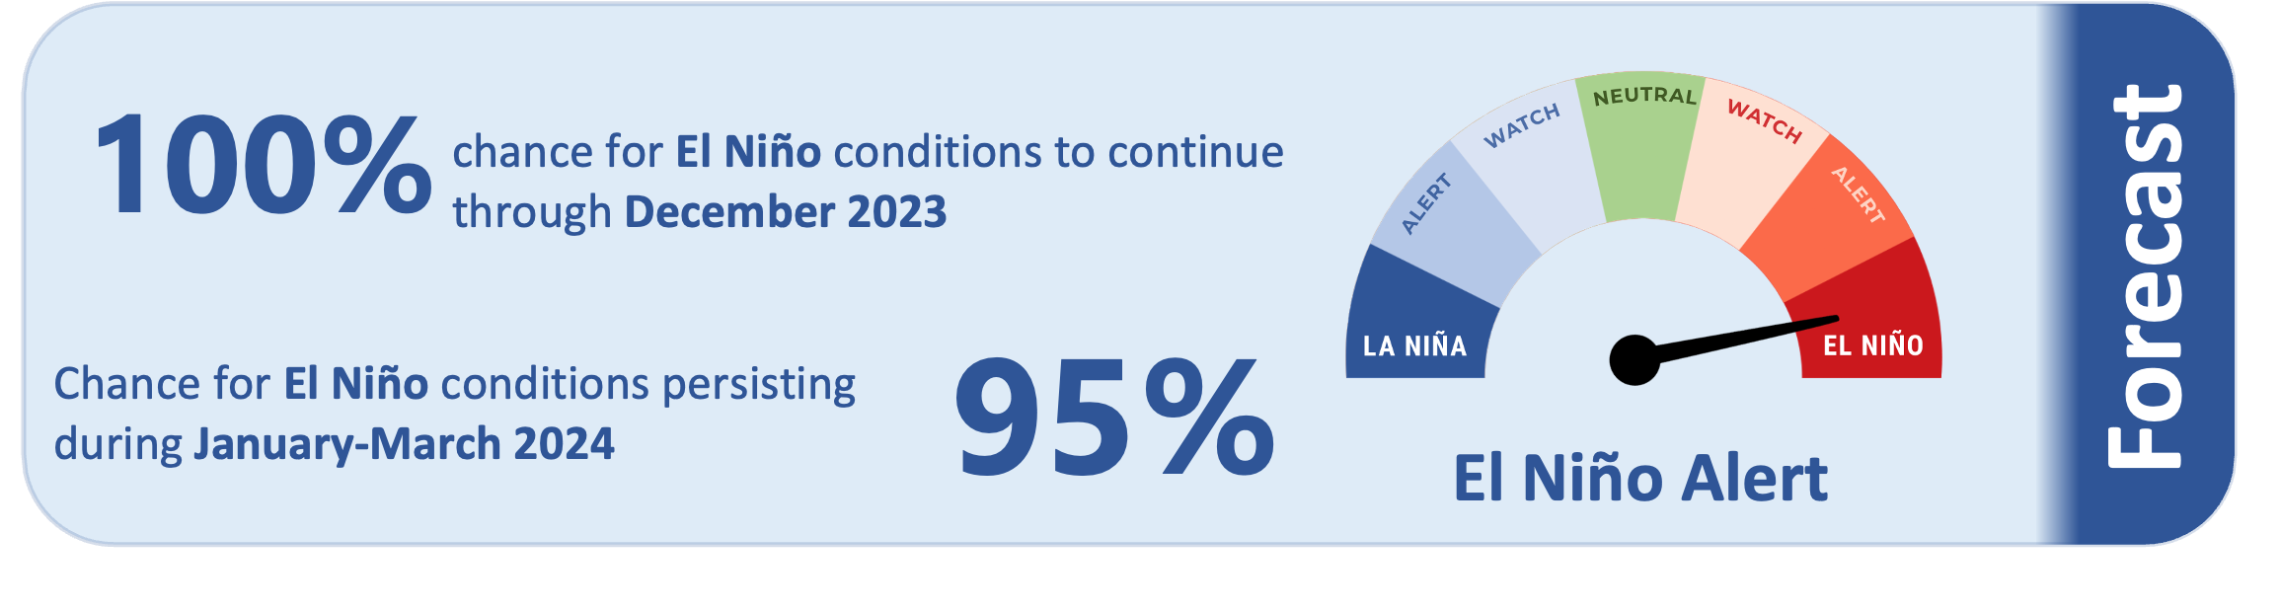 ICU forecast October 2023 - 100% chance El Niño conditions to continue through December 2023